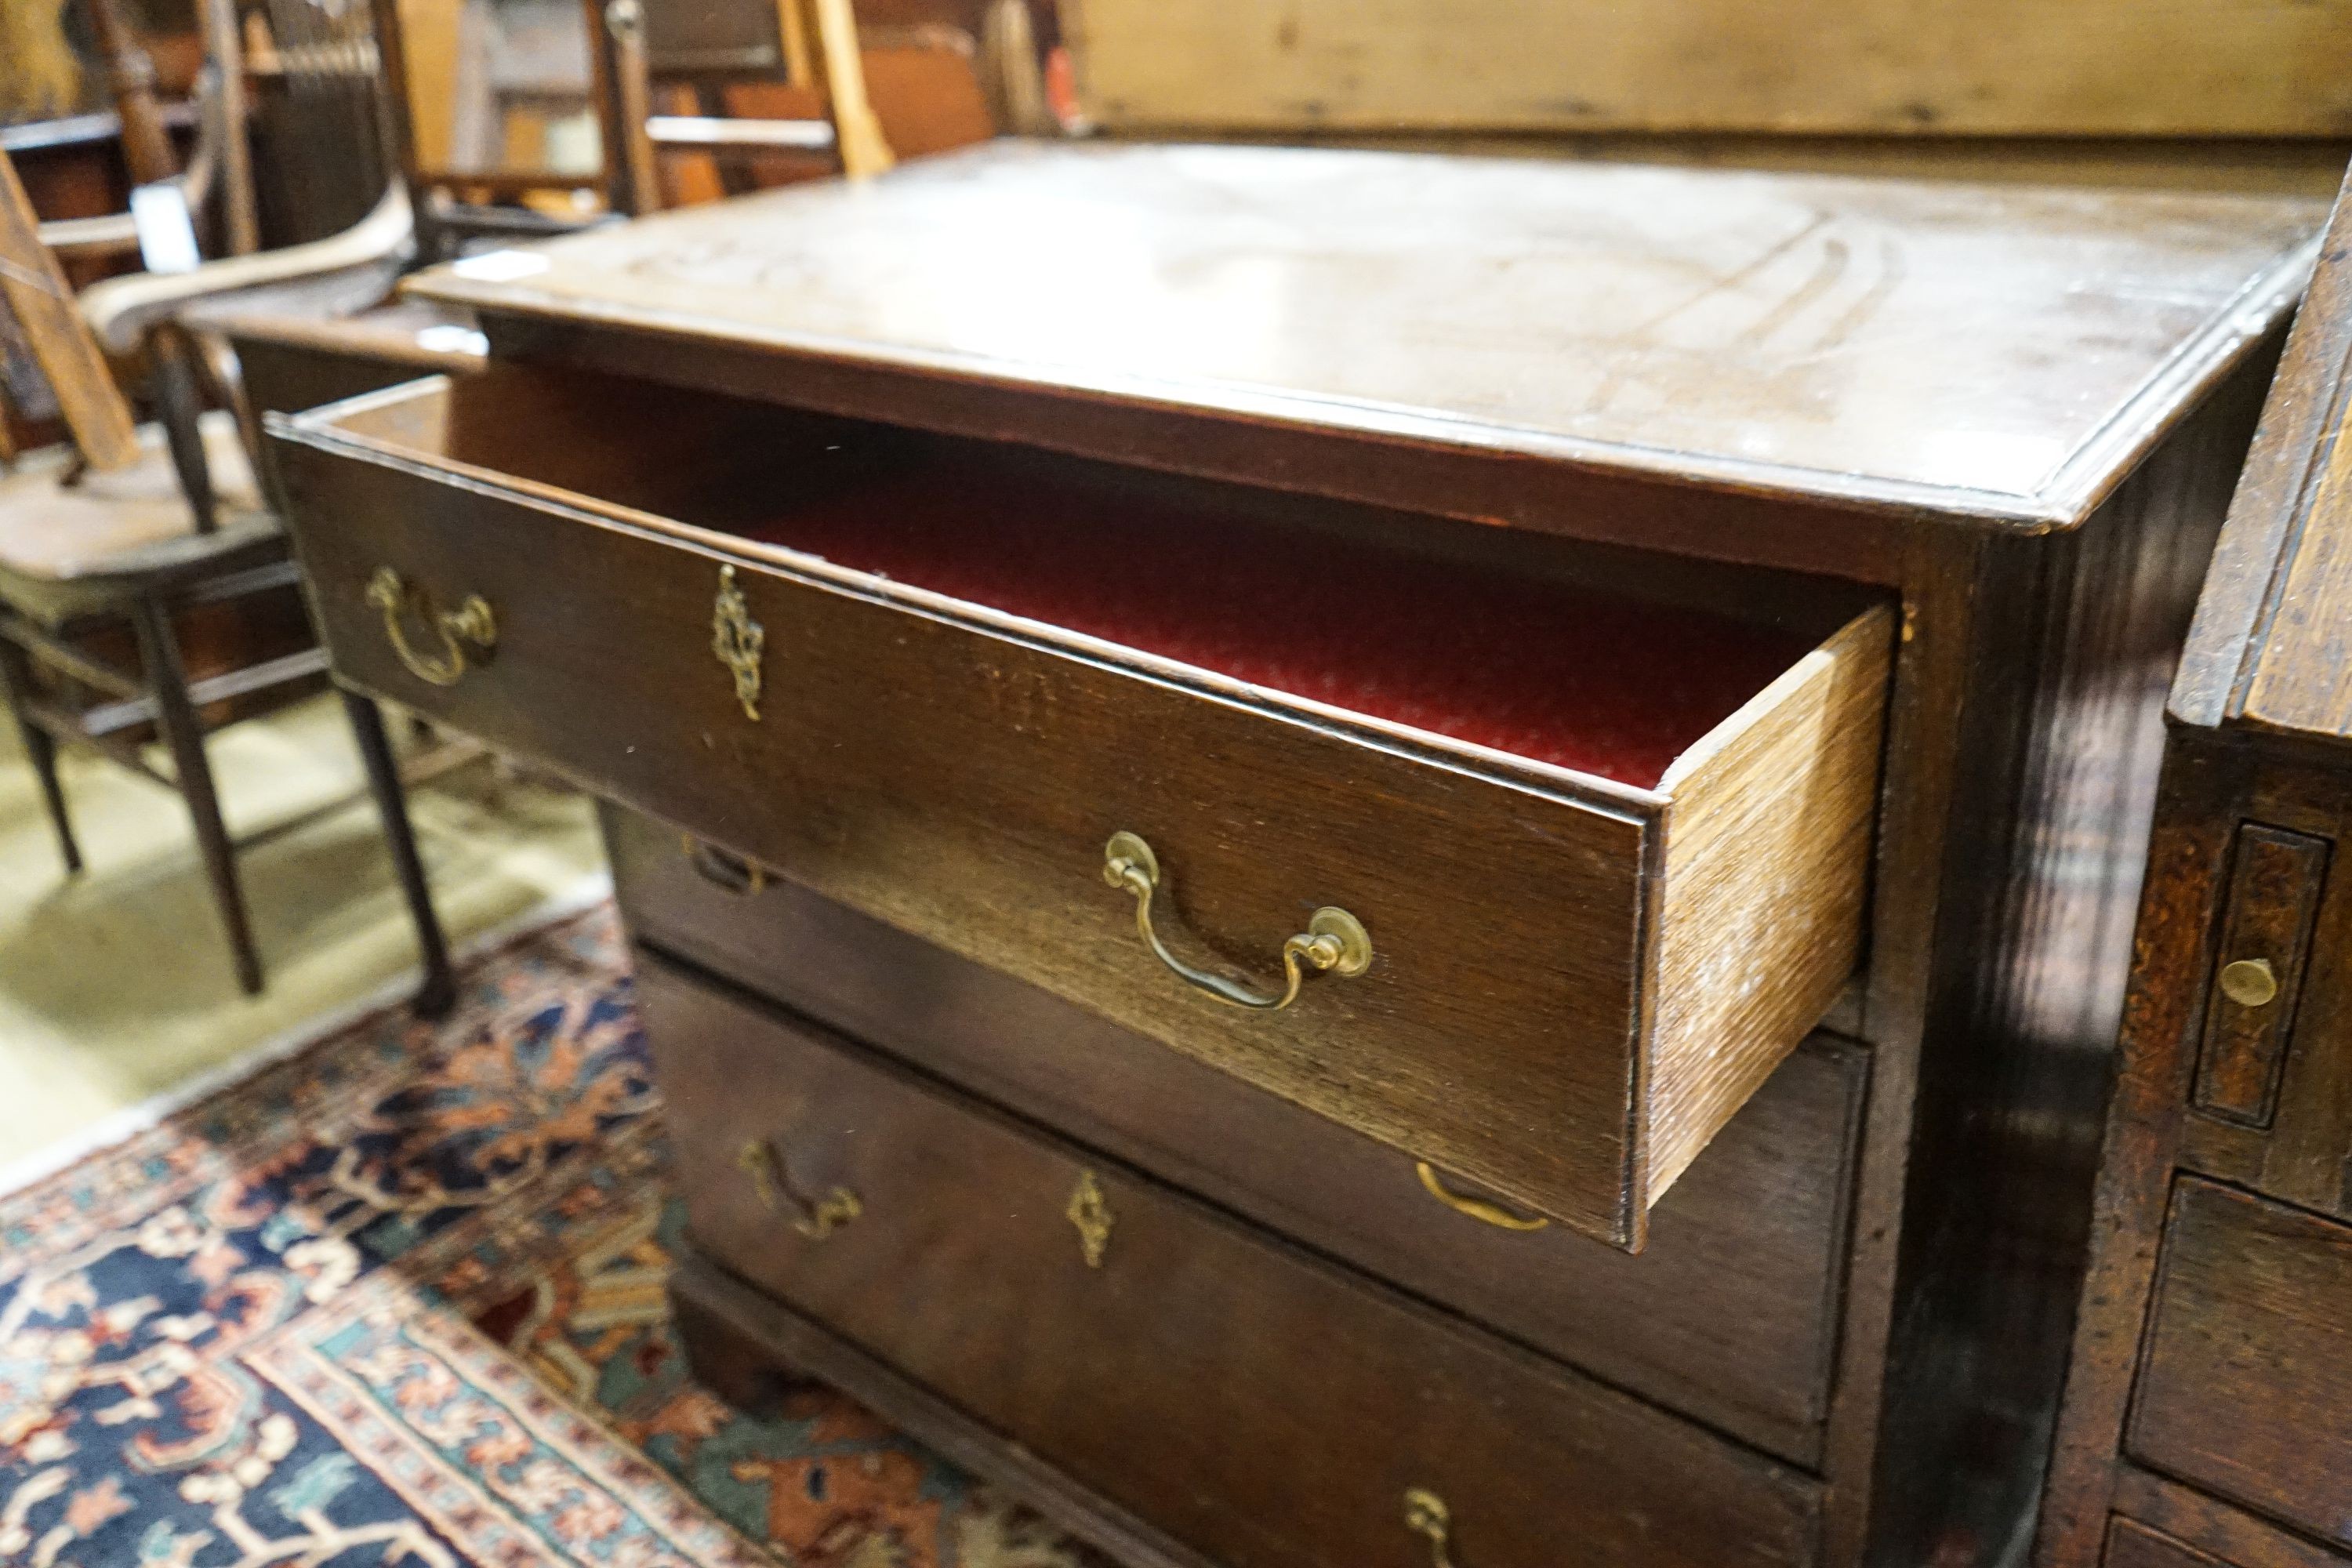 A George III style oak three drawer chest, width 86cm, depth 46cm, height 78cm